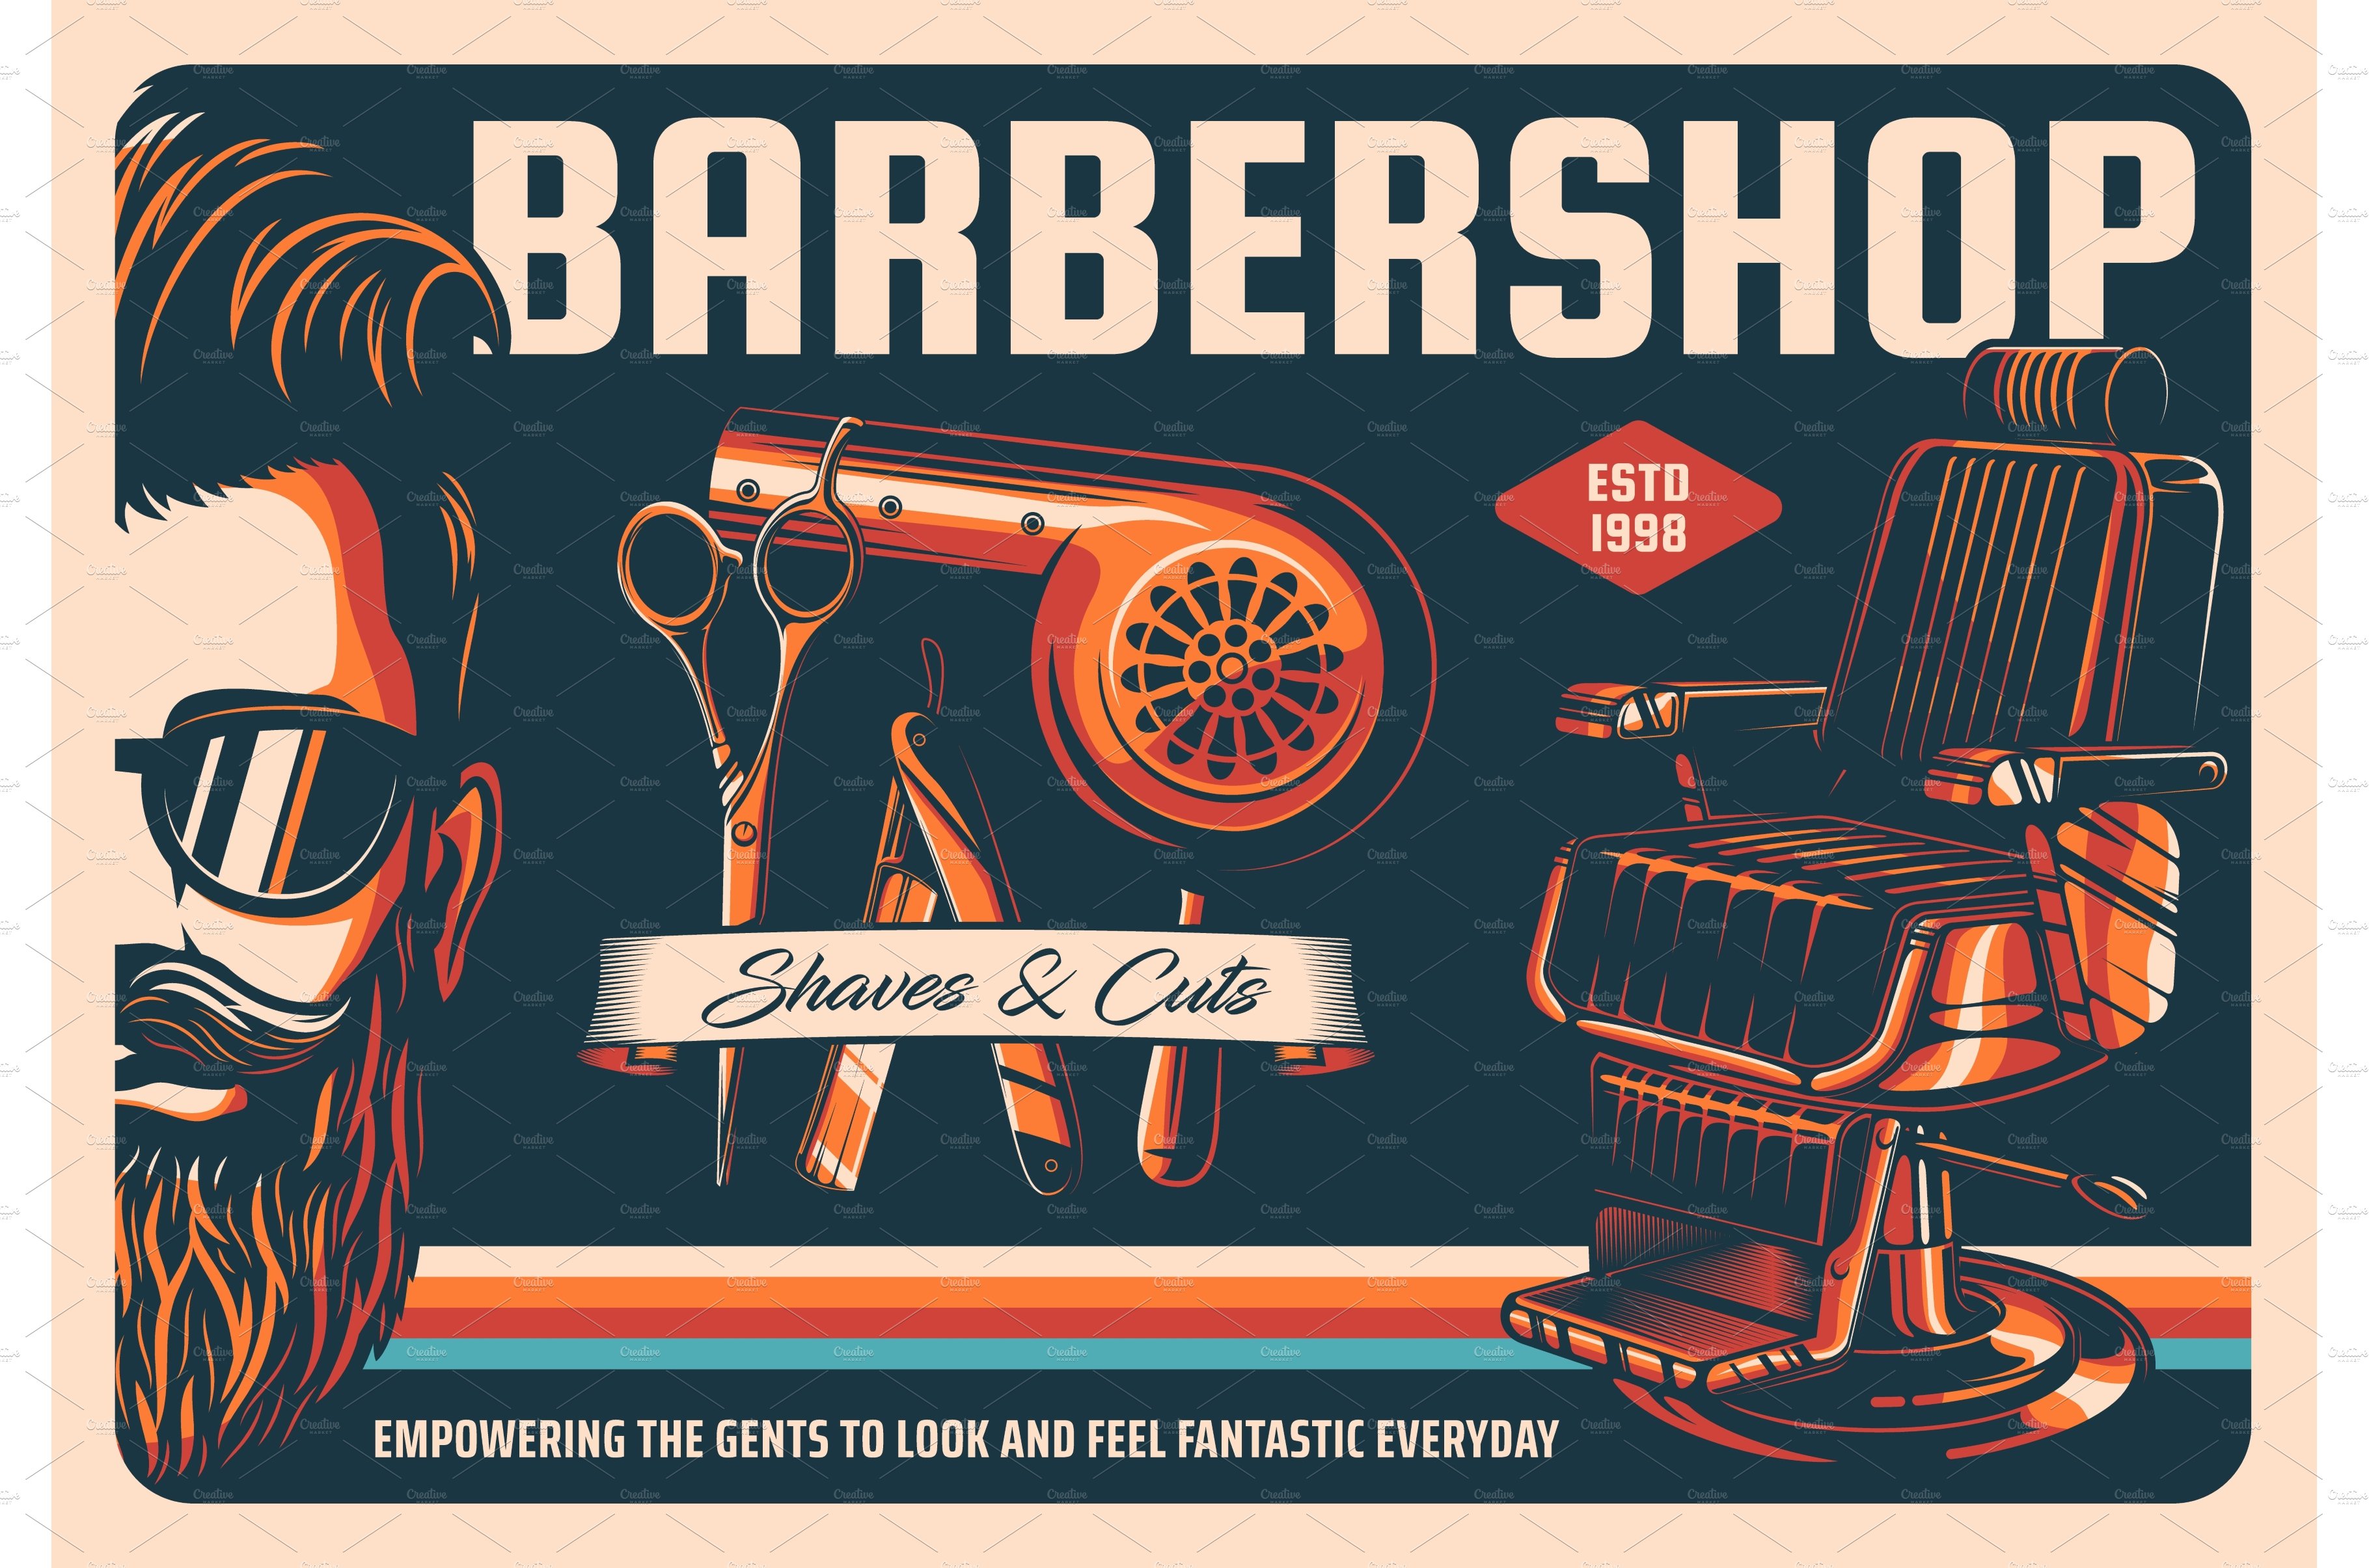 Barber shop haircut, beard shave cover image.